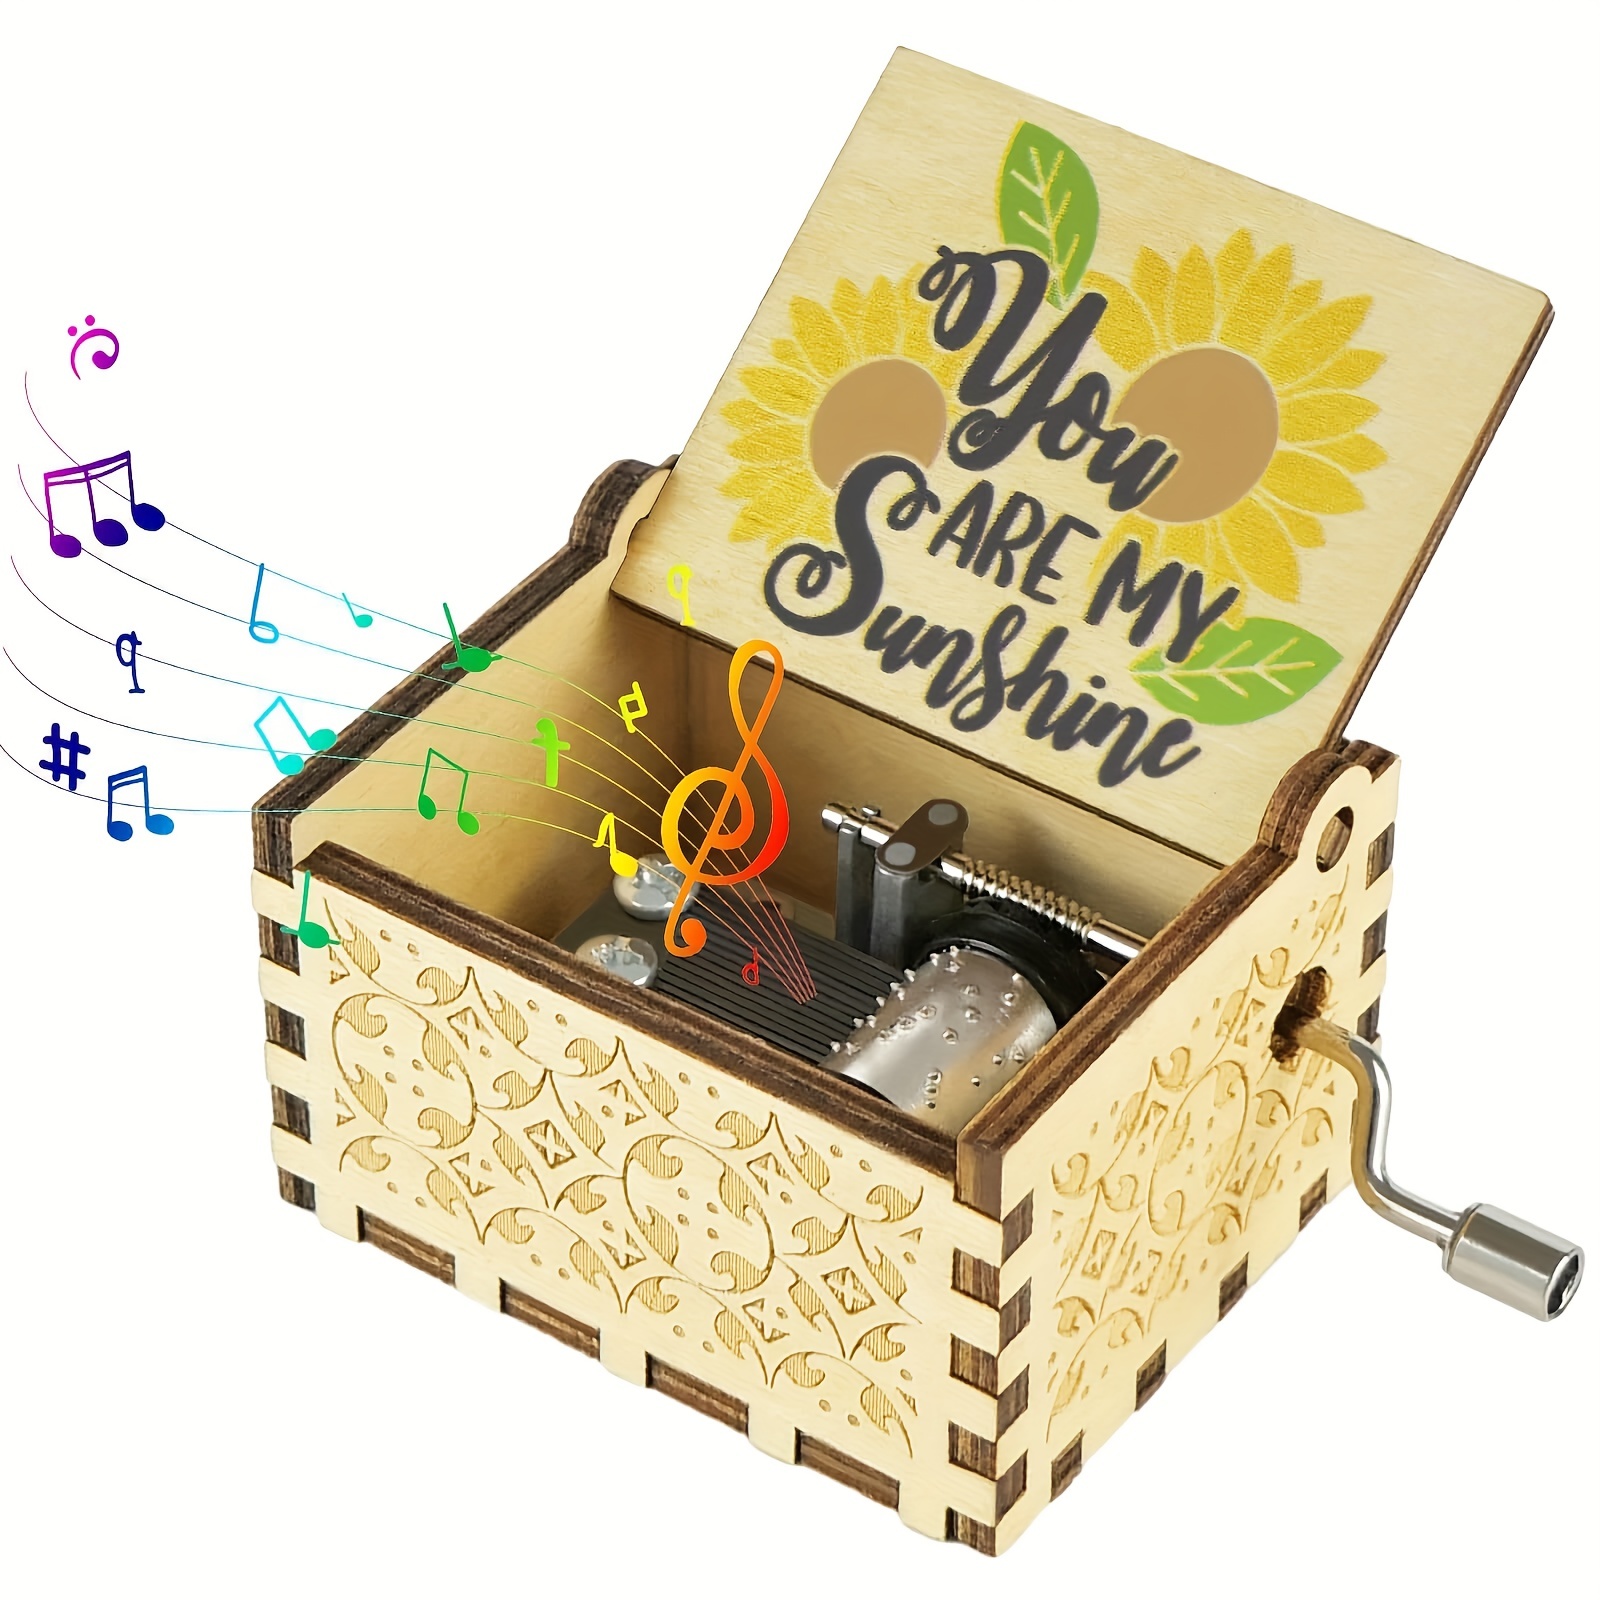  Finssyeasy Caja de música de madera personalizada Play You are  My Sunshine, caja de música personalizada con texto grabado, caja musical  de regalo para hija, mamá, cumpleaños, San Valentín (You are